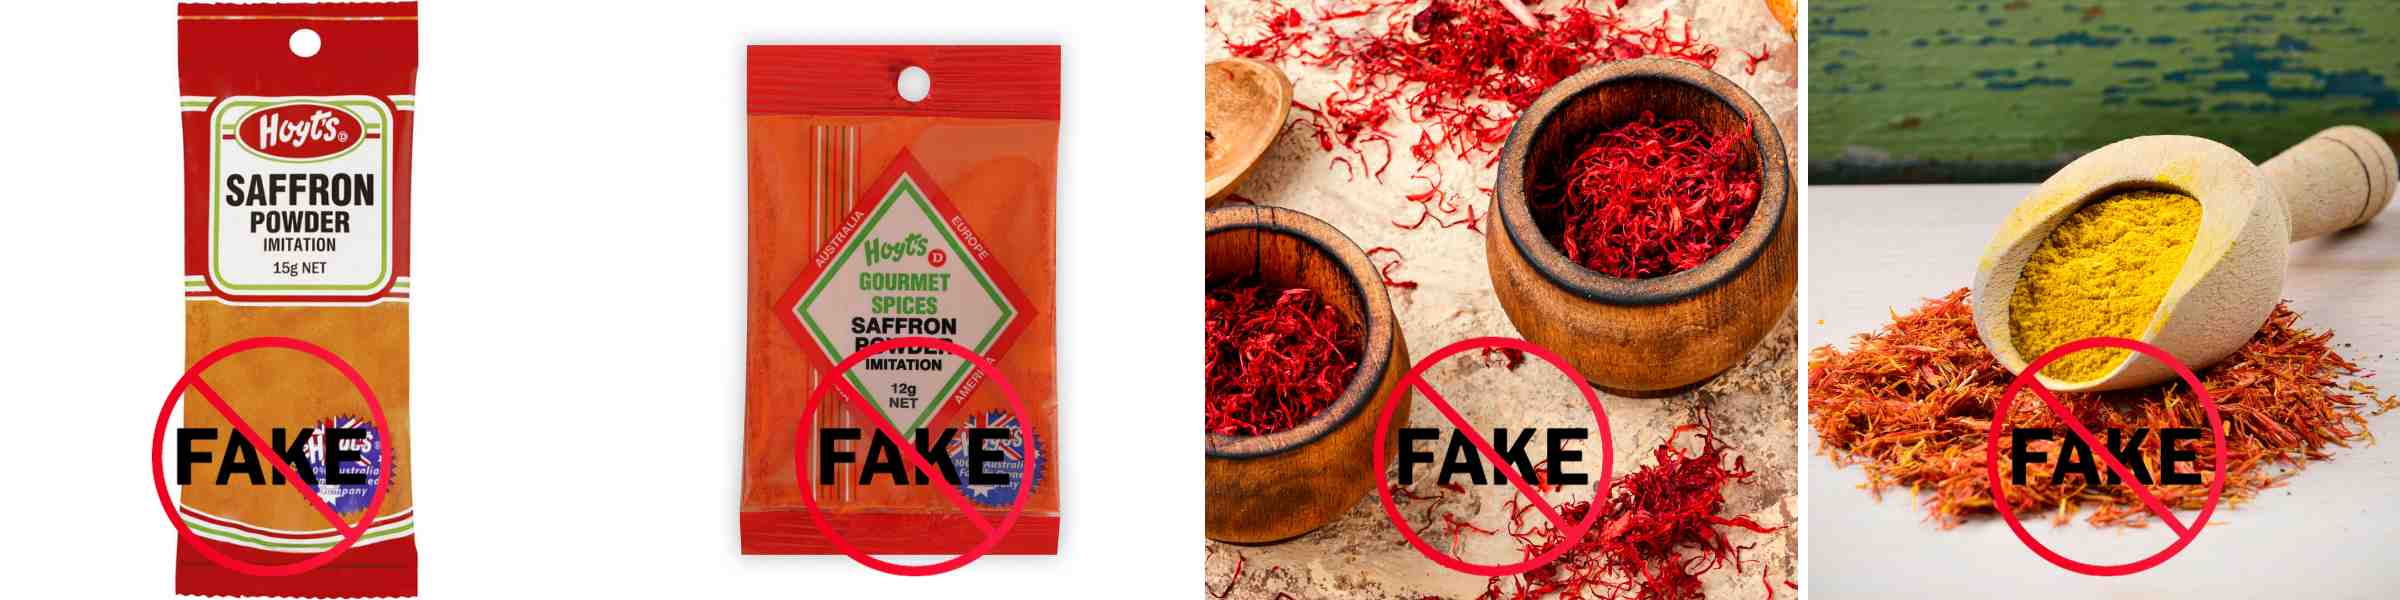 Saffron powder Fake